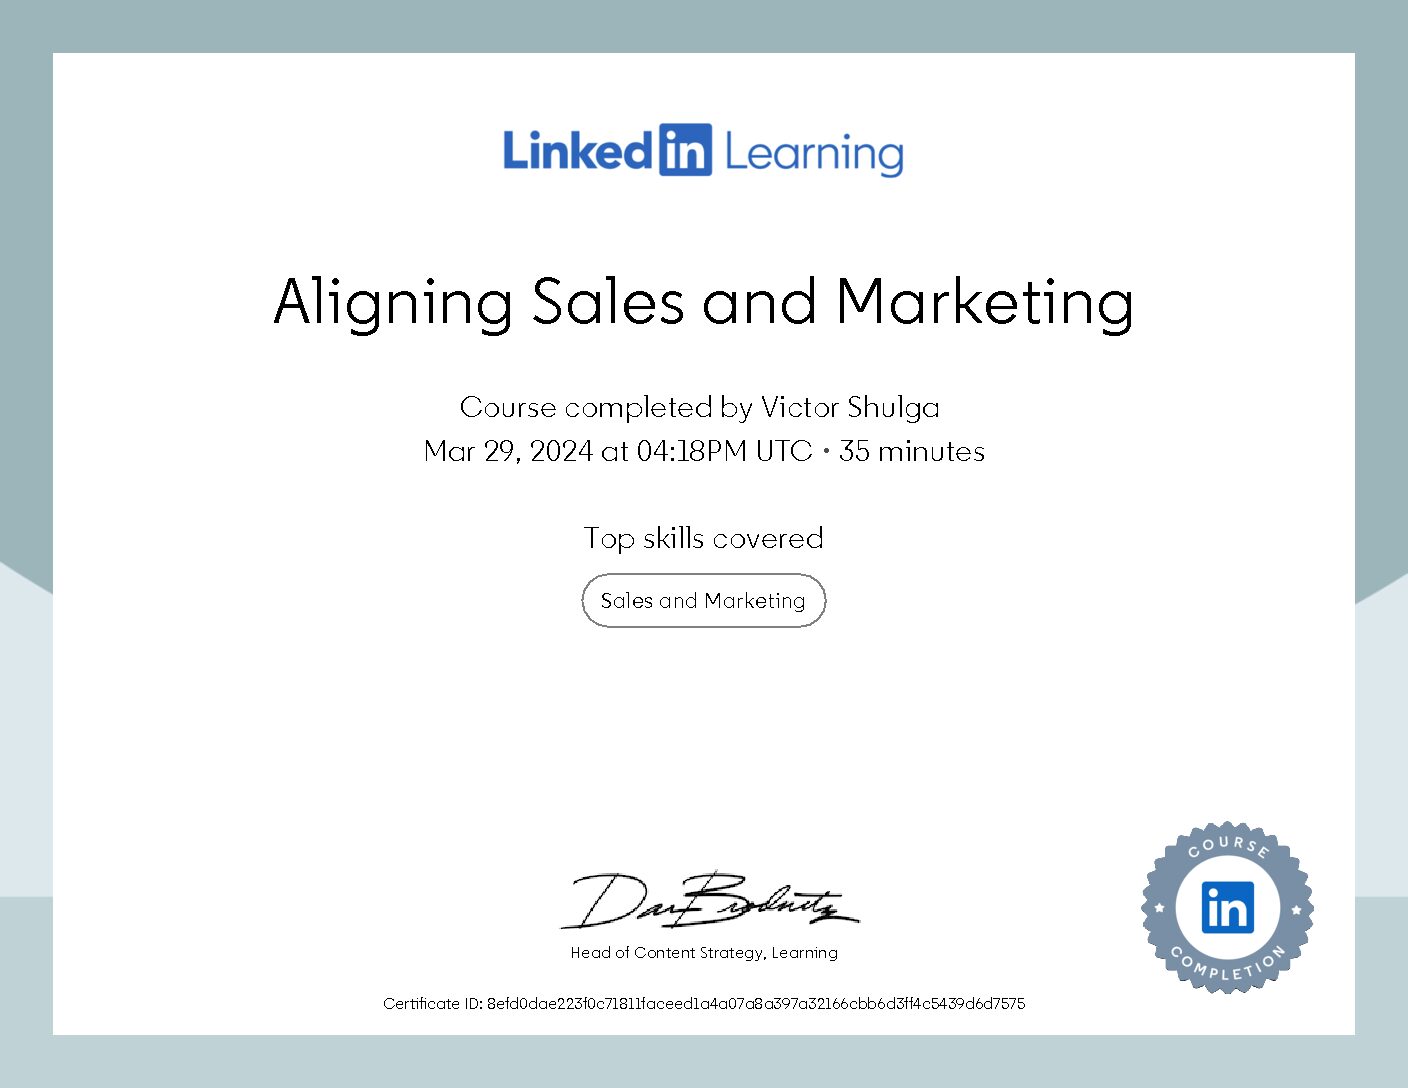 Linkedin_Aligning Sales and Marketing